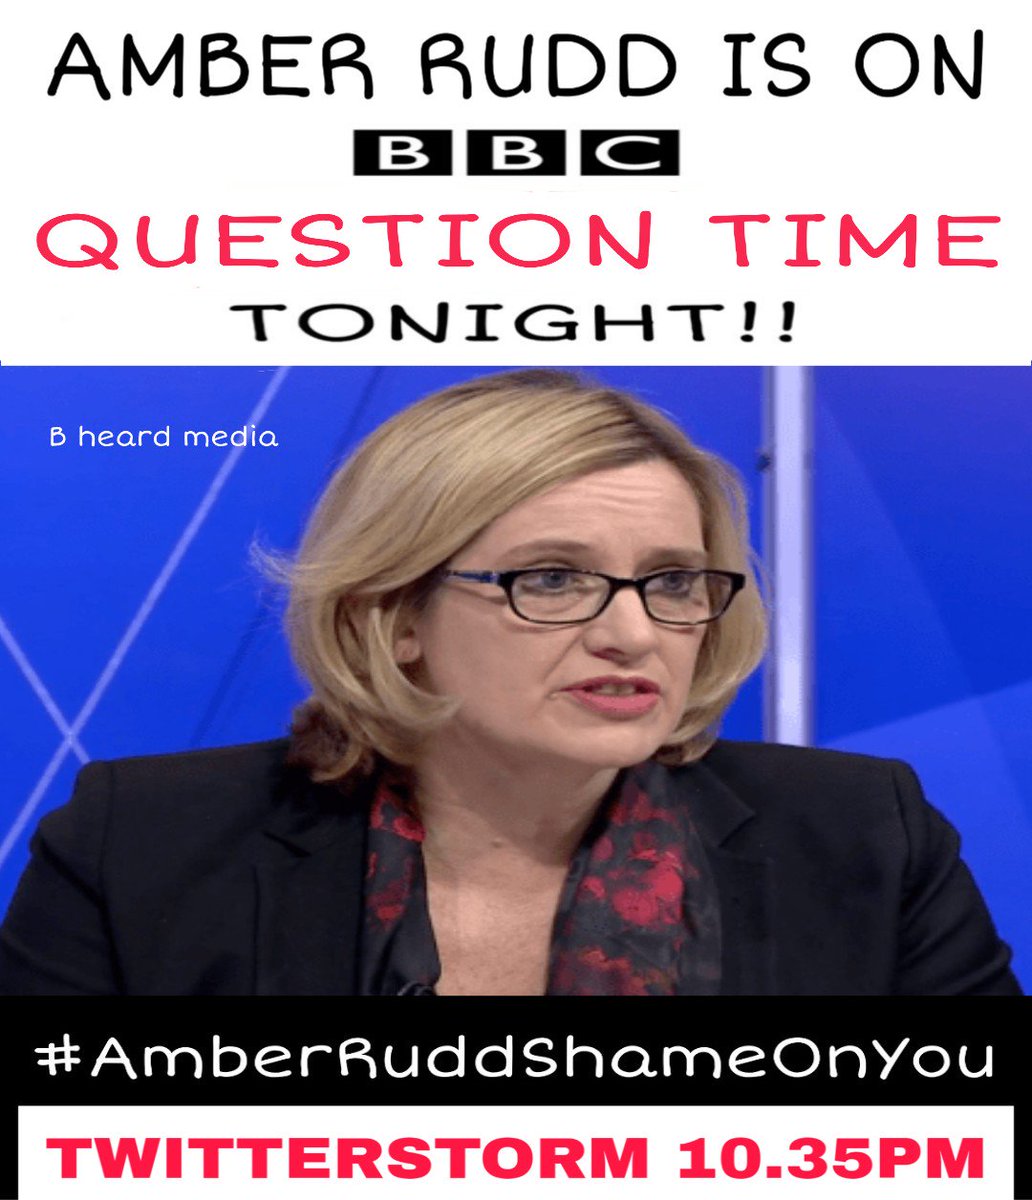 #DWP secretary Amber Rudd is on #bbcqt tonight!

#AmberRuddShameOnYou!!

TwiterStorm 10.35pm 

#ScrapUniversalCredit 
@chunkymark @RespectIsVital @imajsaclaimant @Angry_Voice